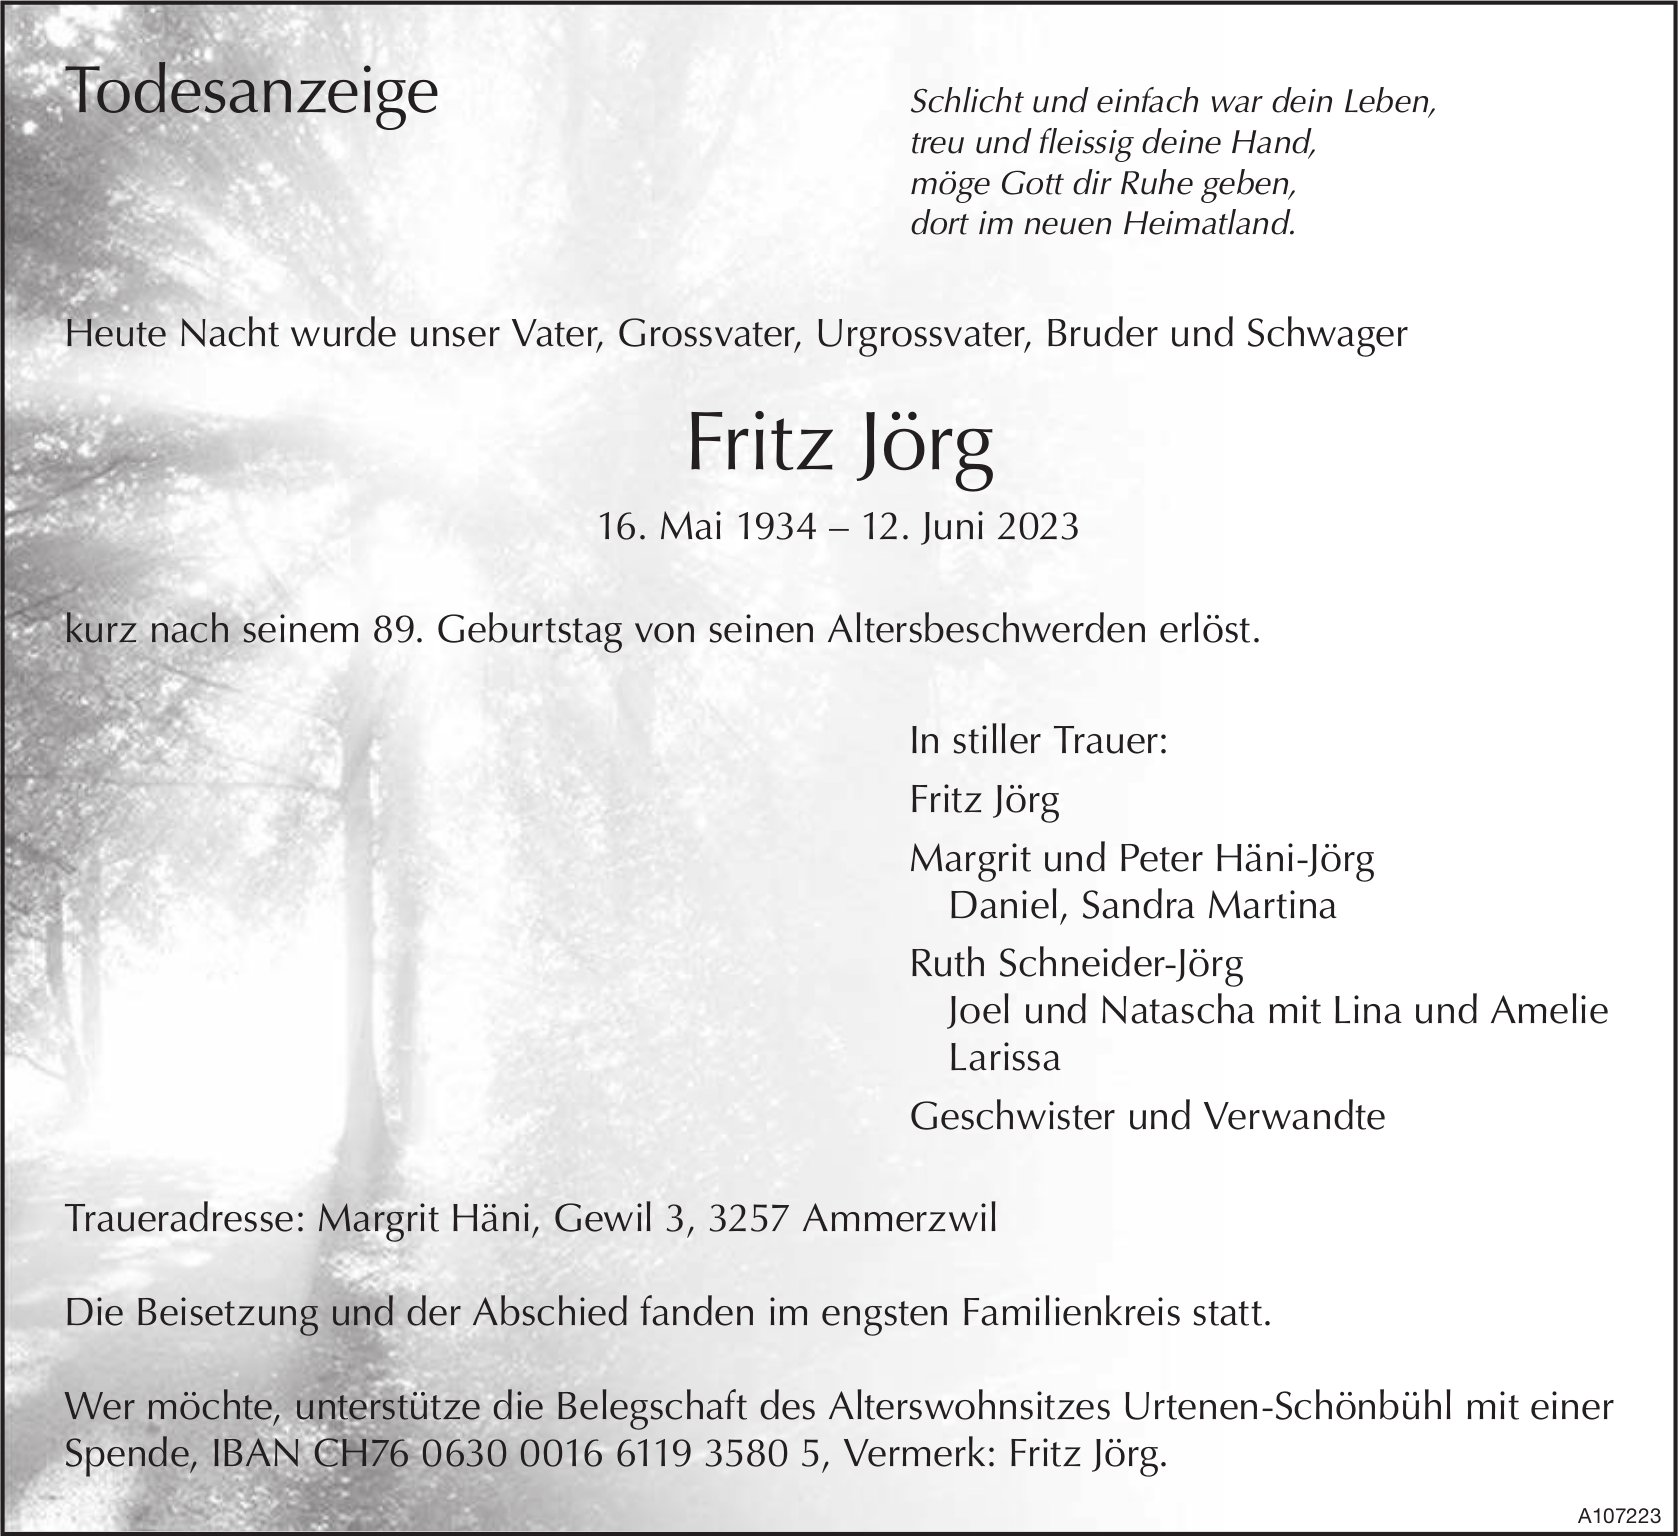 Fritz Jörg, Juni 2023 / TA